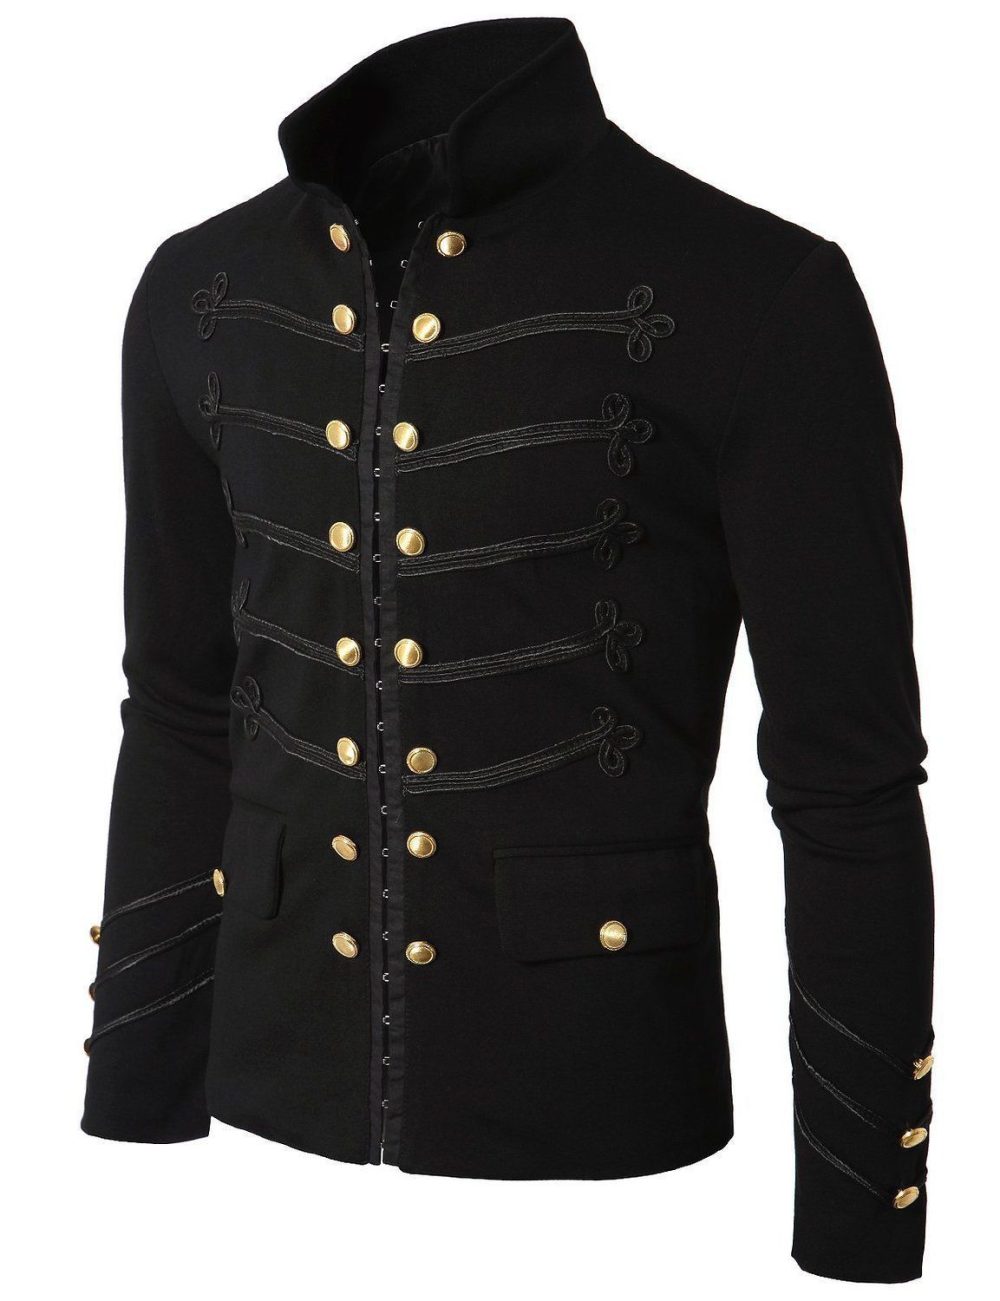 Black Embroidery Military Napoleon Hook Jacket, Military Jackets, Traditional Jackets, Jackets for Men